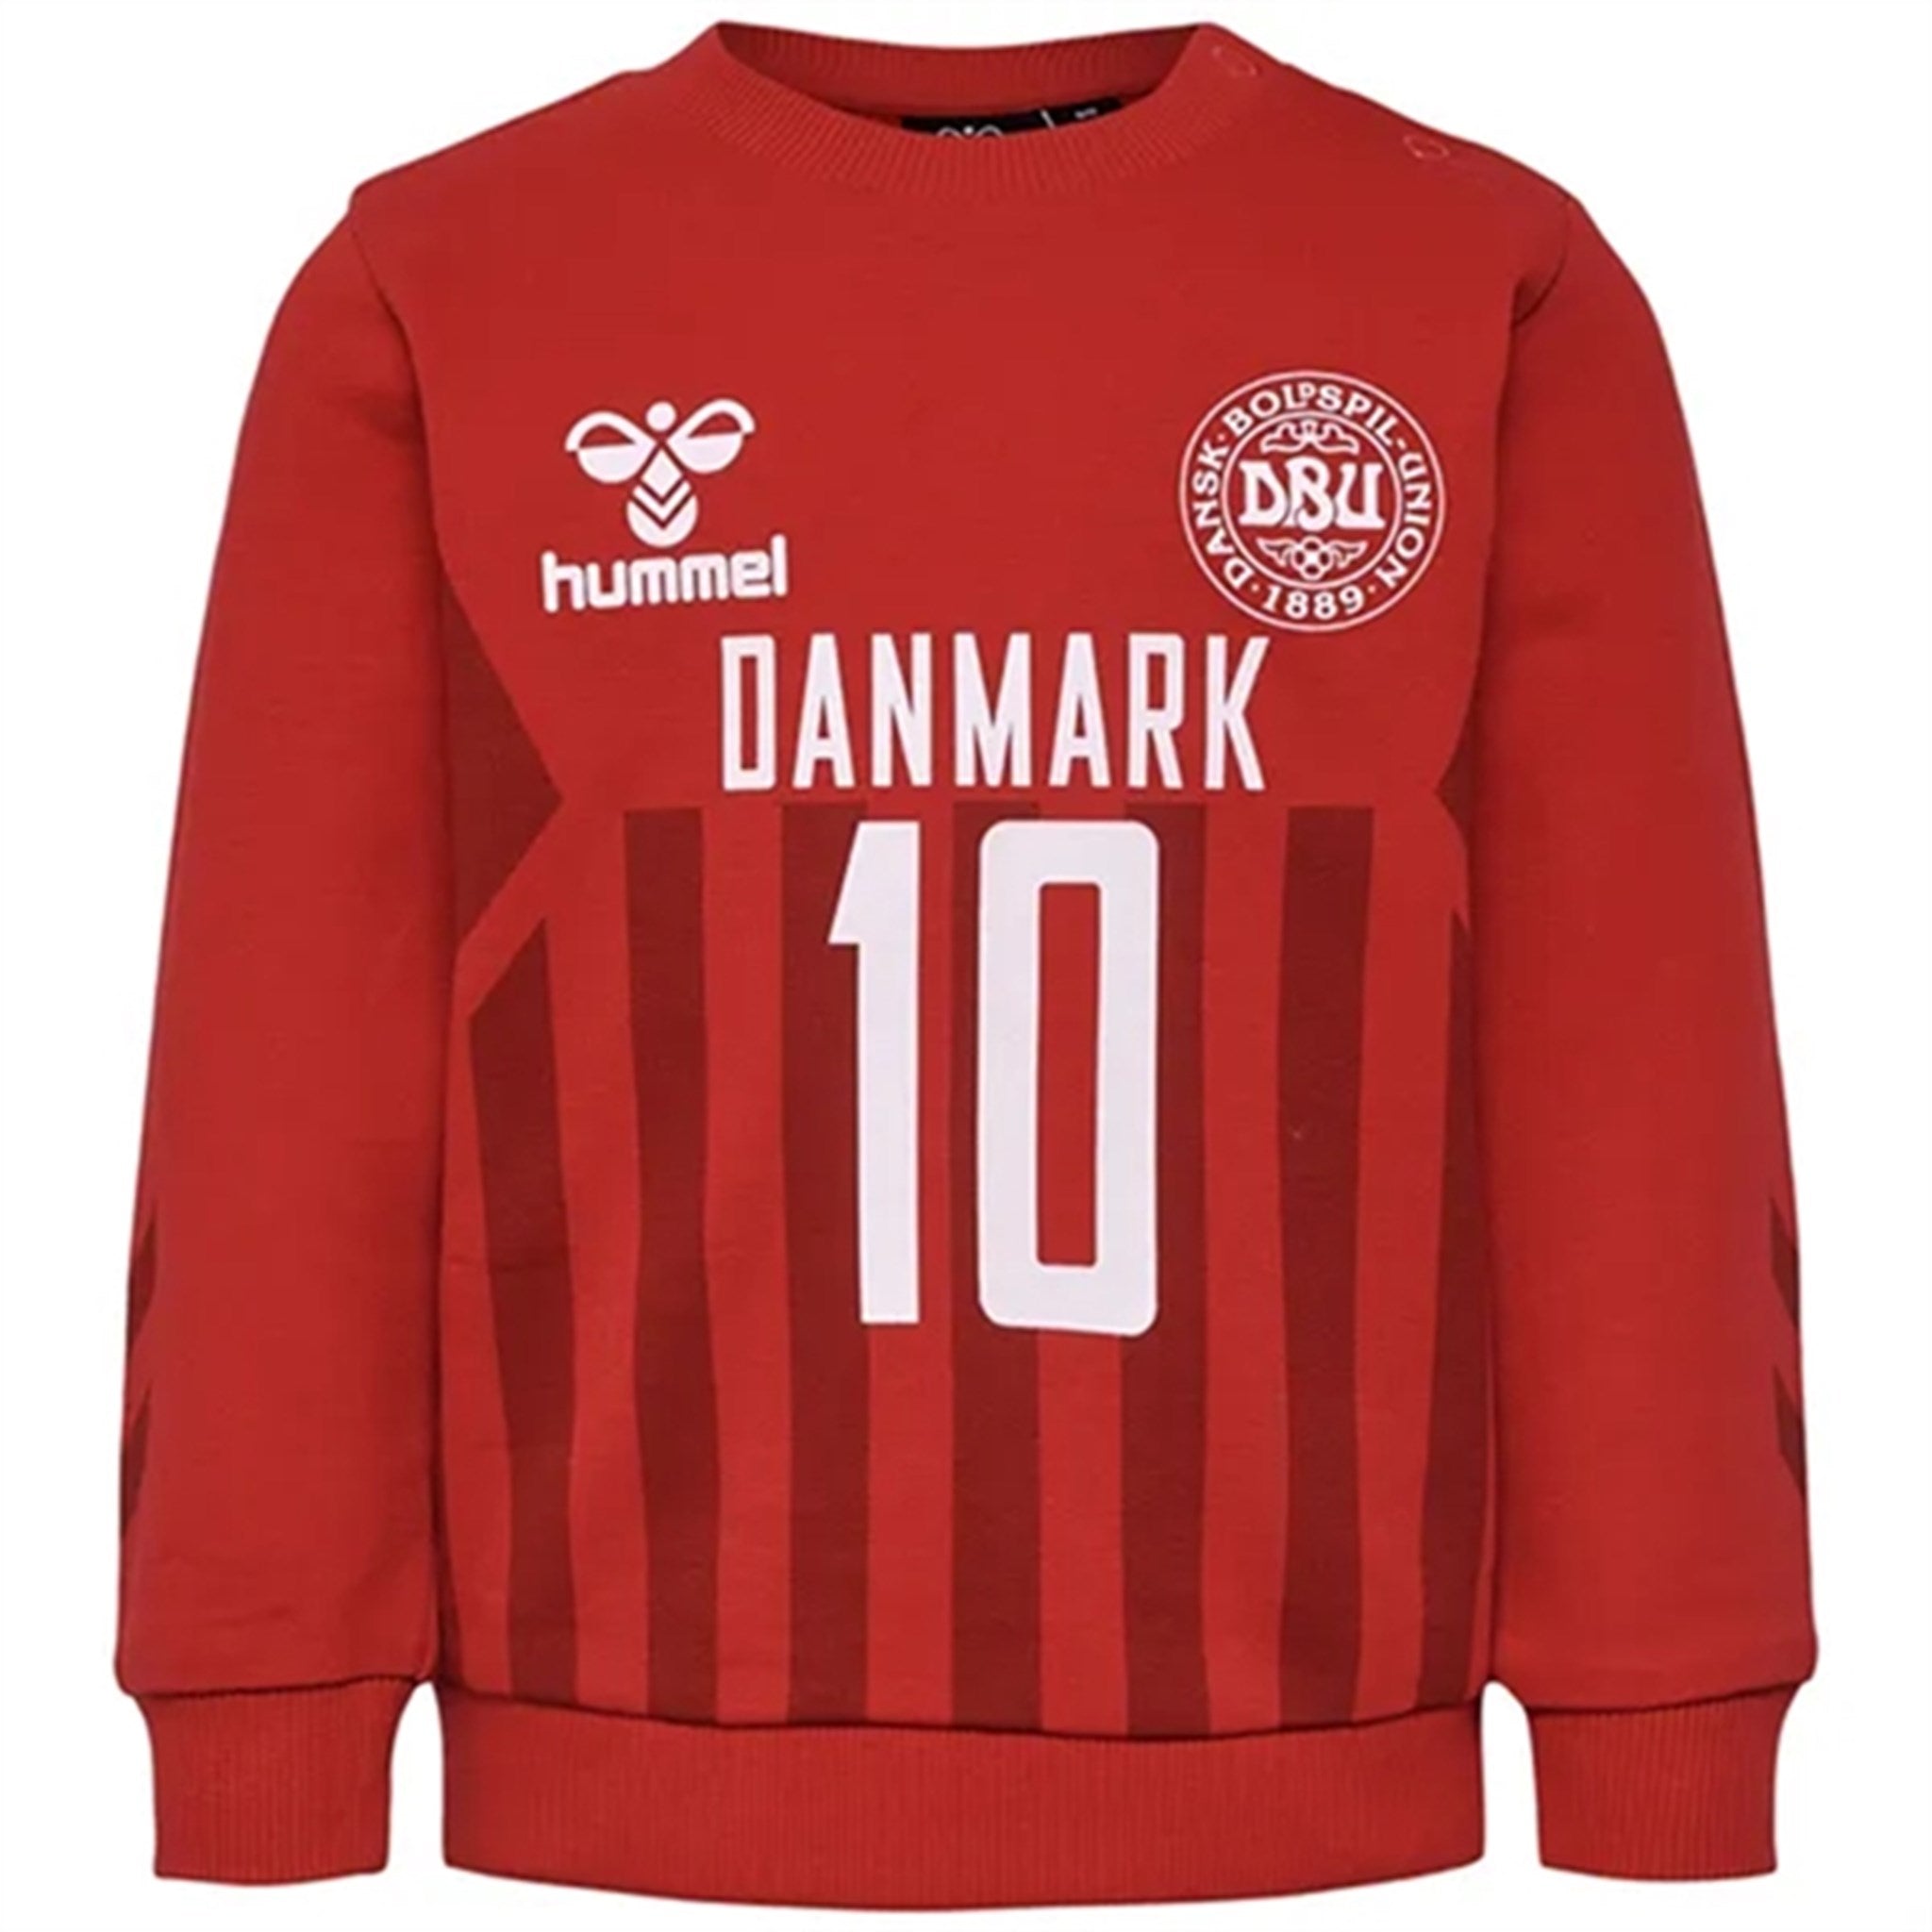 Hummel DBU VM 2022 Tango Red Celebrate Sweatshirt